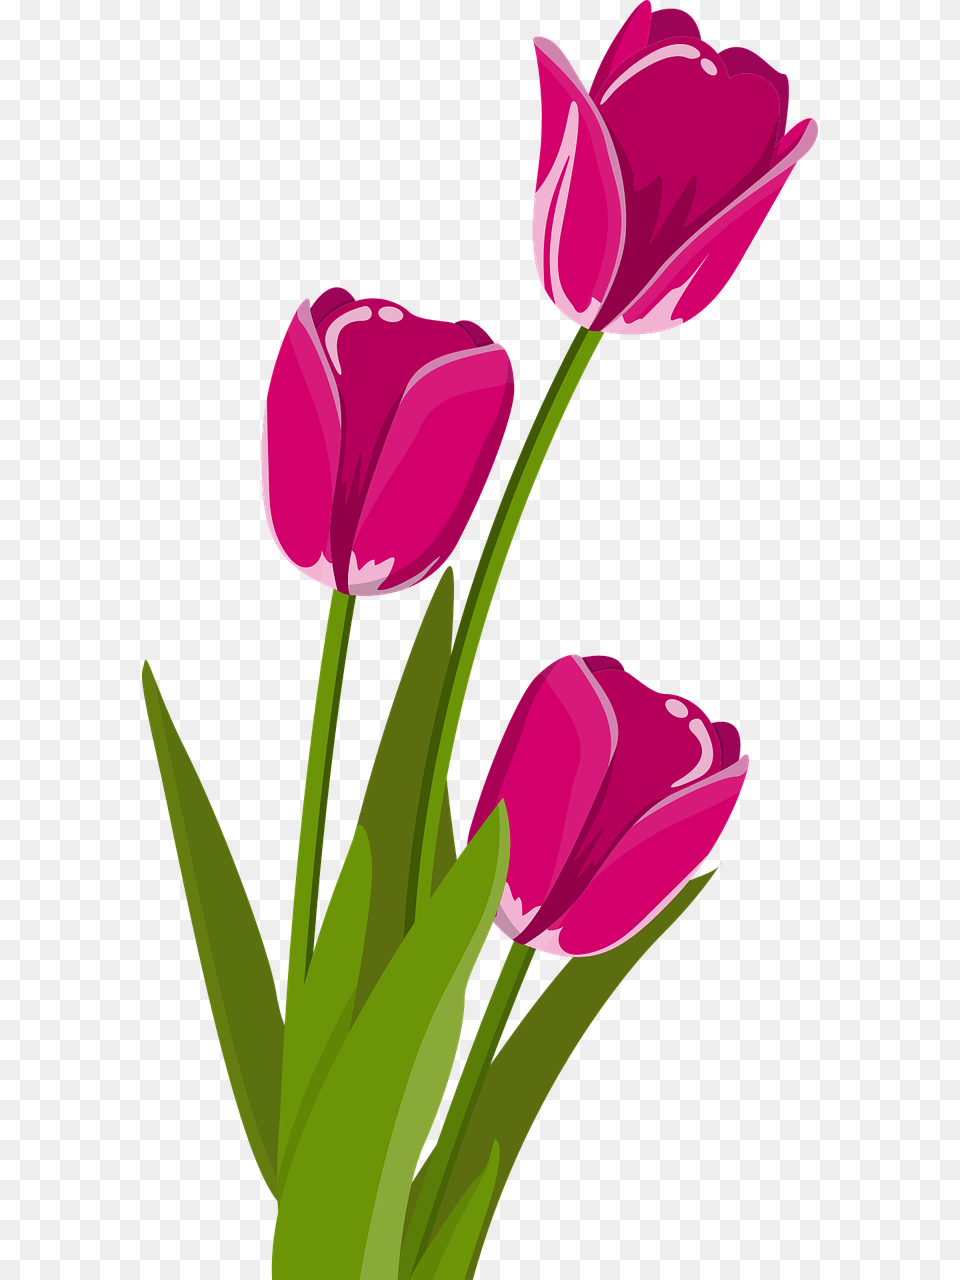 Bunga Tulip 3 Bunga Tulip, Flower, Plant Png